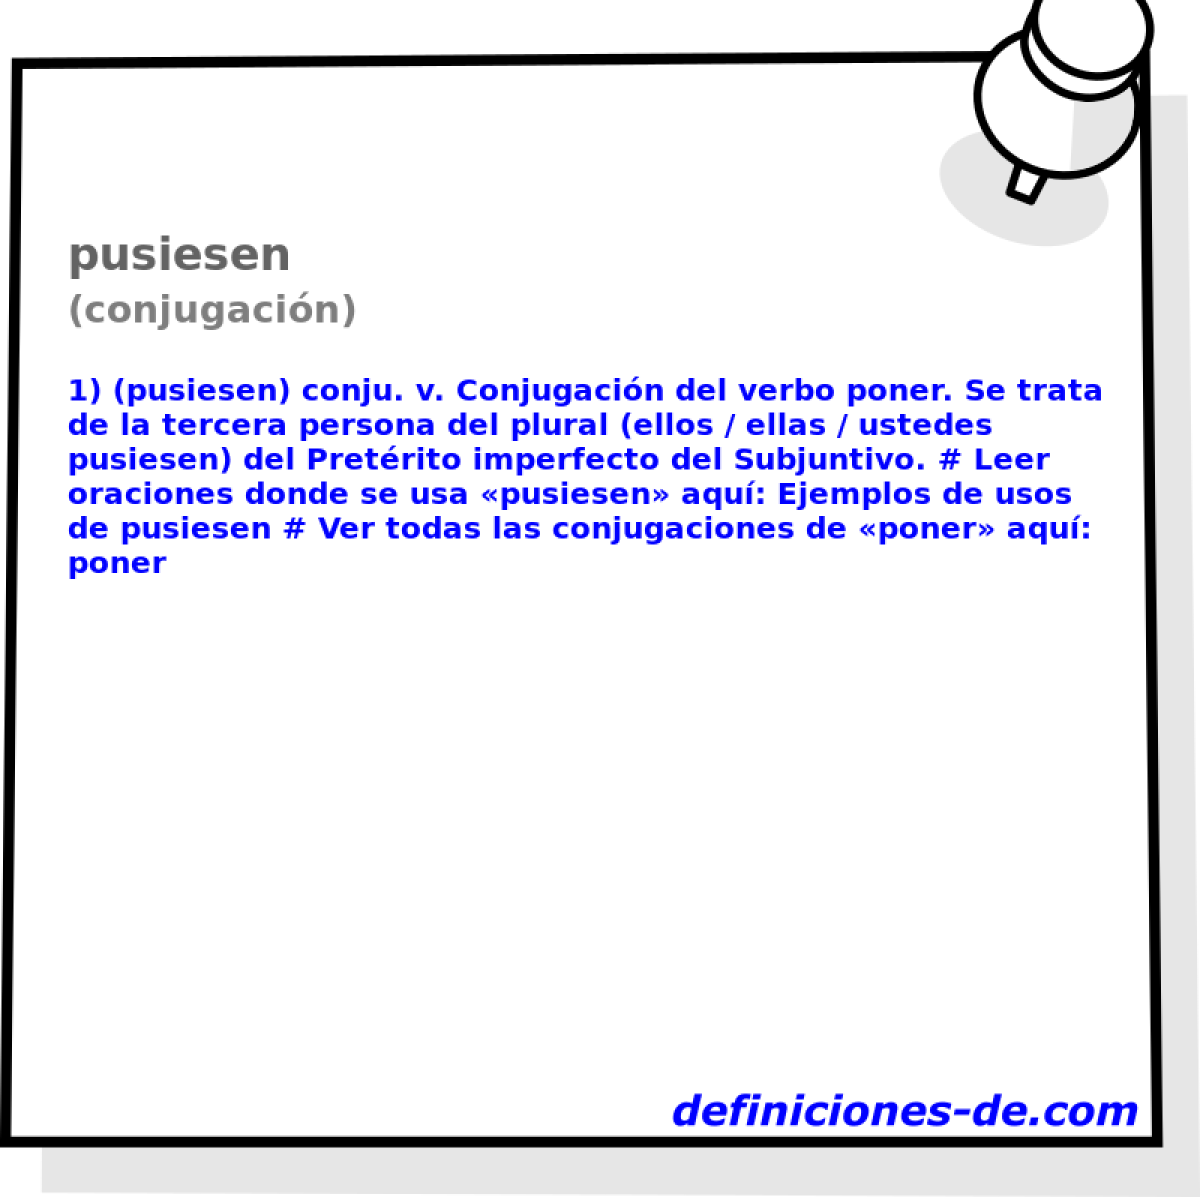 pusiesen (conjugacin)